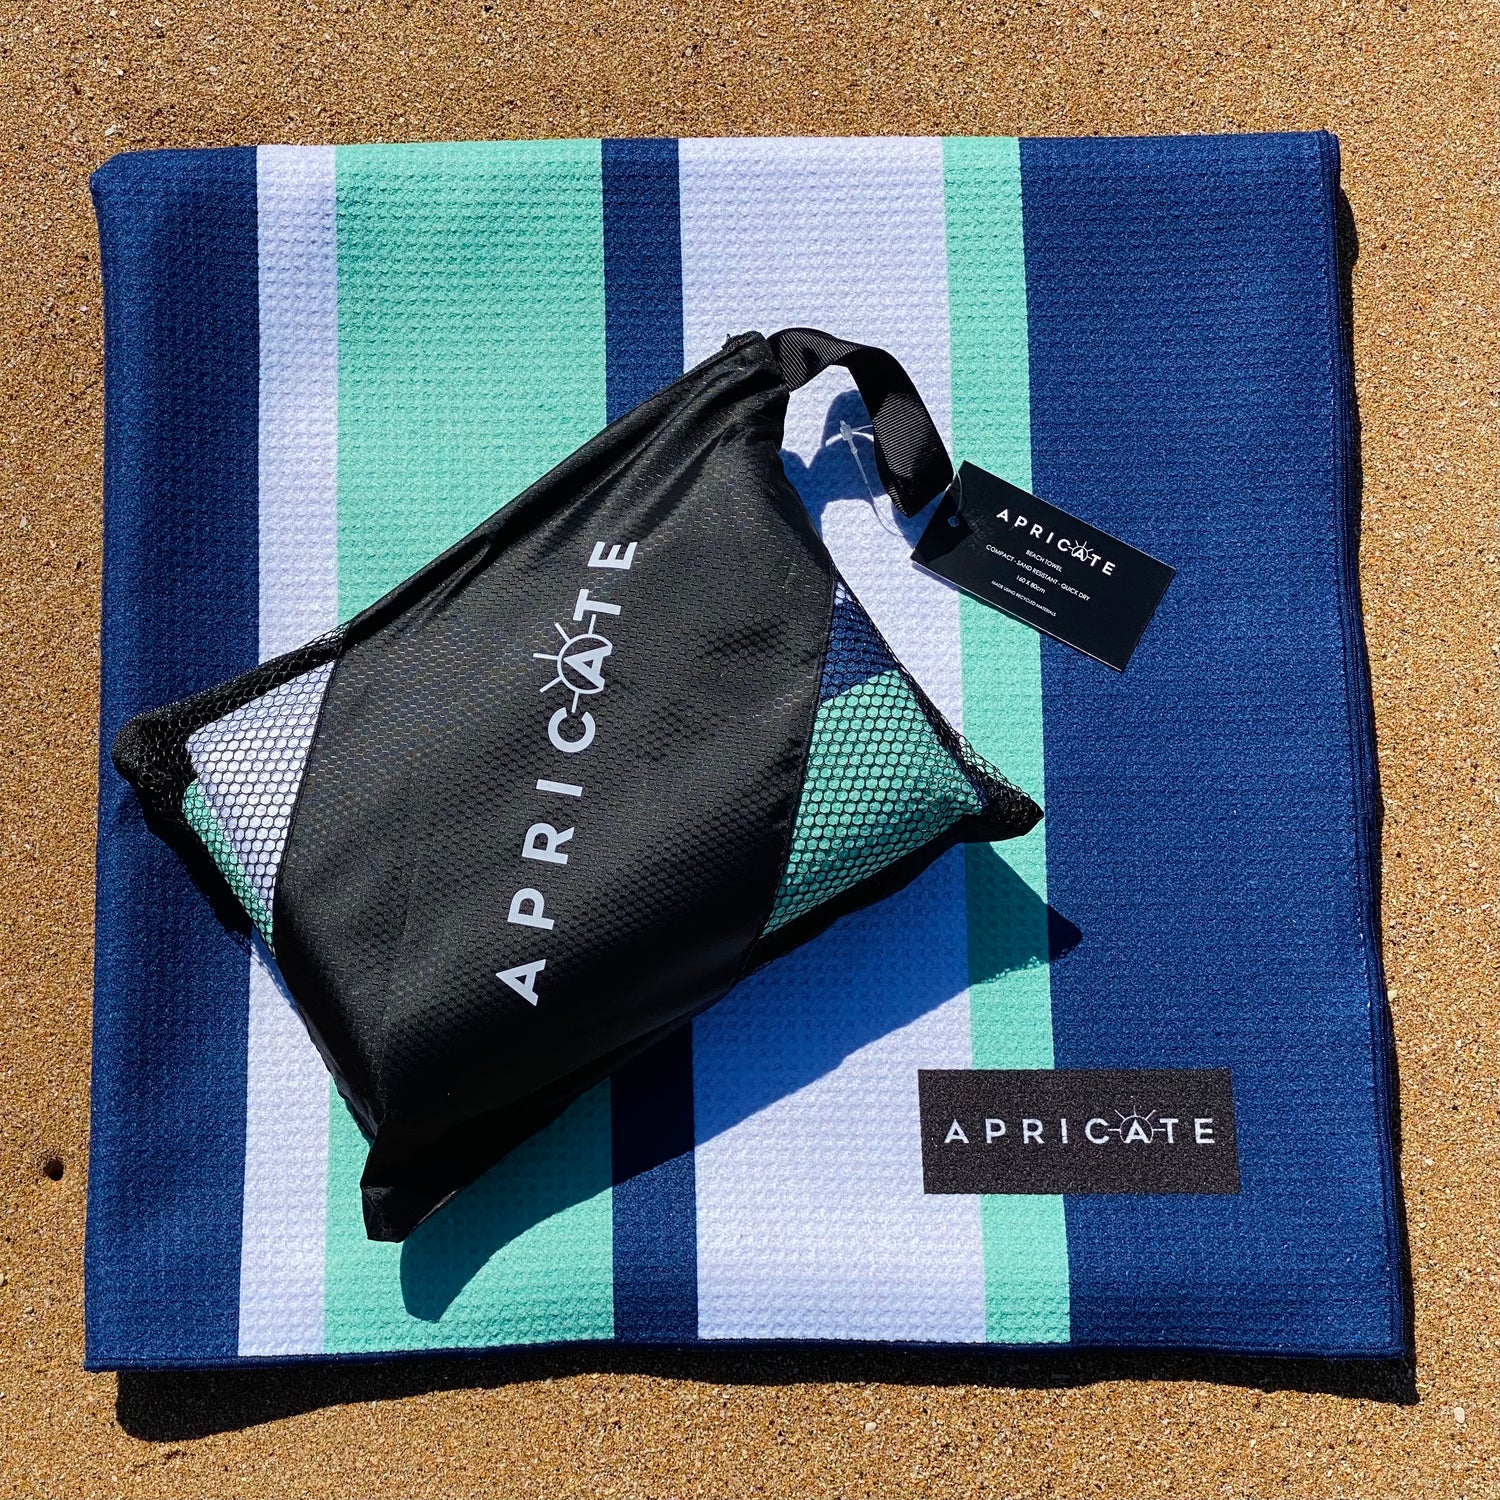 Blue Striped Beach Towel | Cheap Beach Towels | Apricate